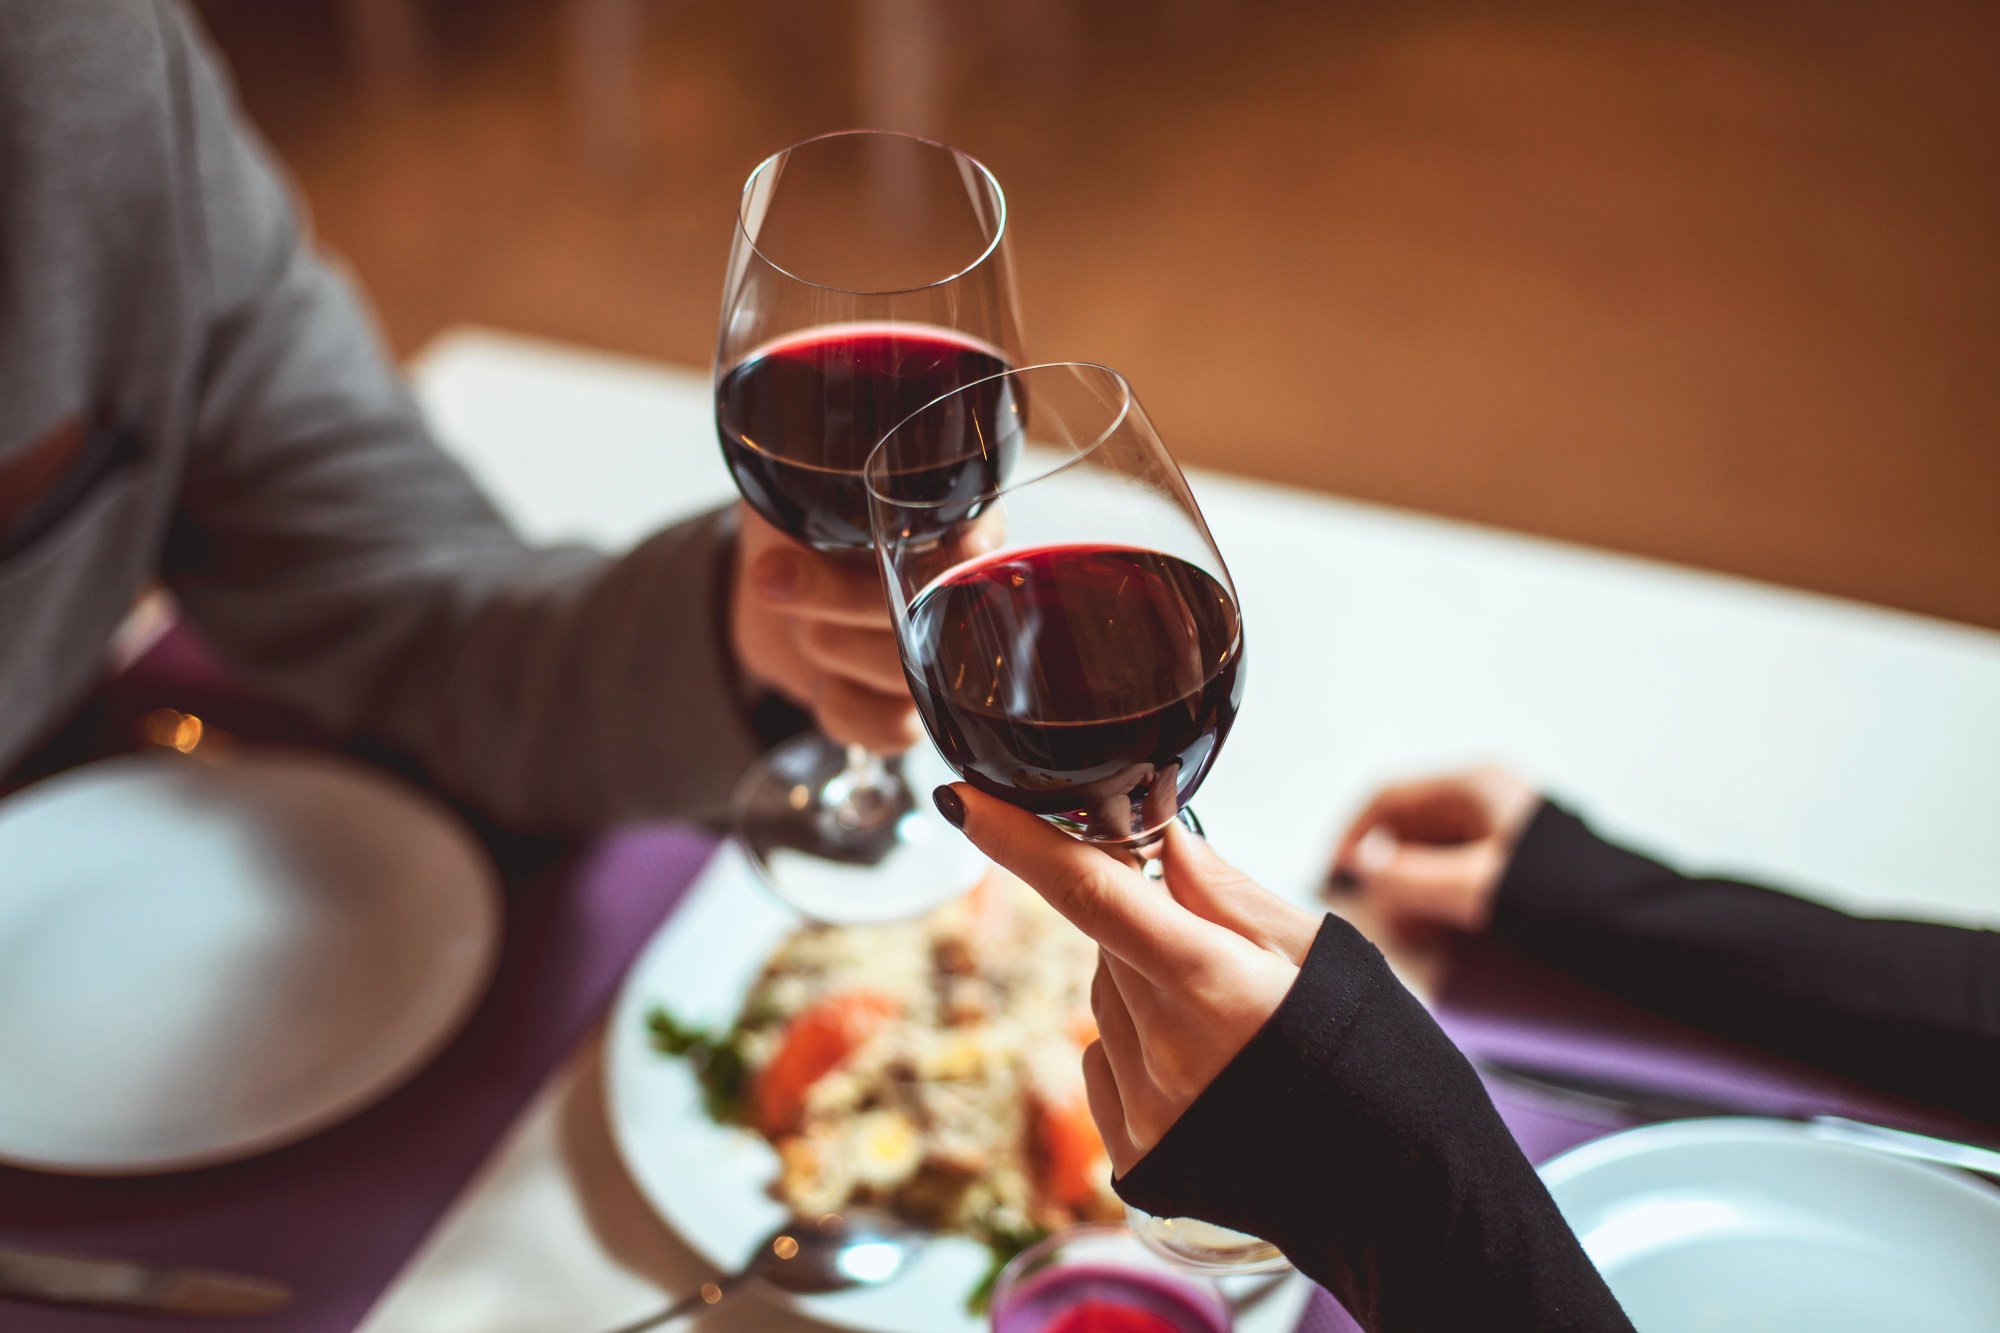 5 бокал вина. Бокал вина. Бокал вина на столе в ресторане. Бокал красного вина. Романтический ужин в ресторане.